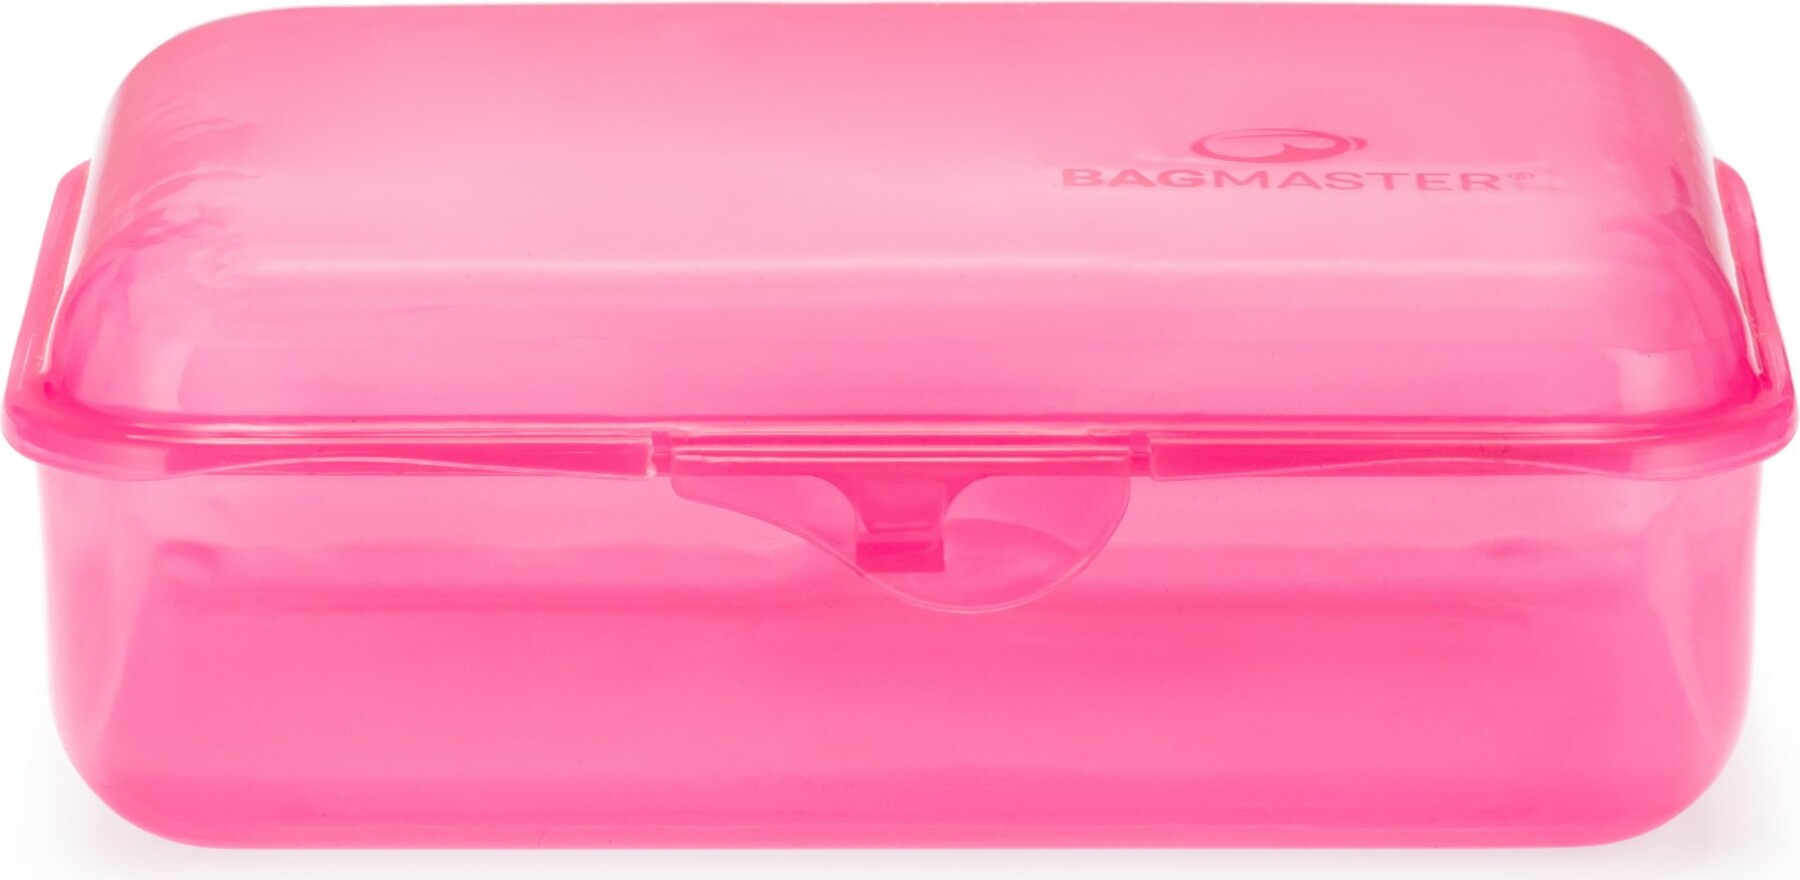 Svačinový box Bagmaster - růžová